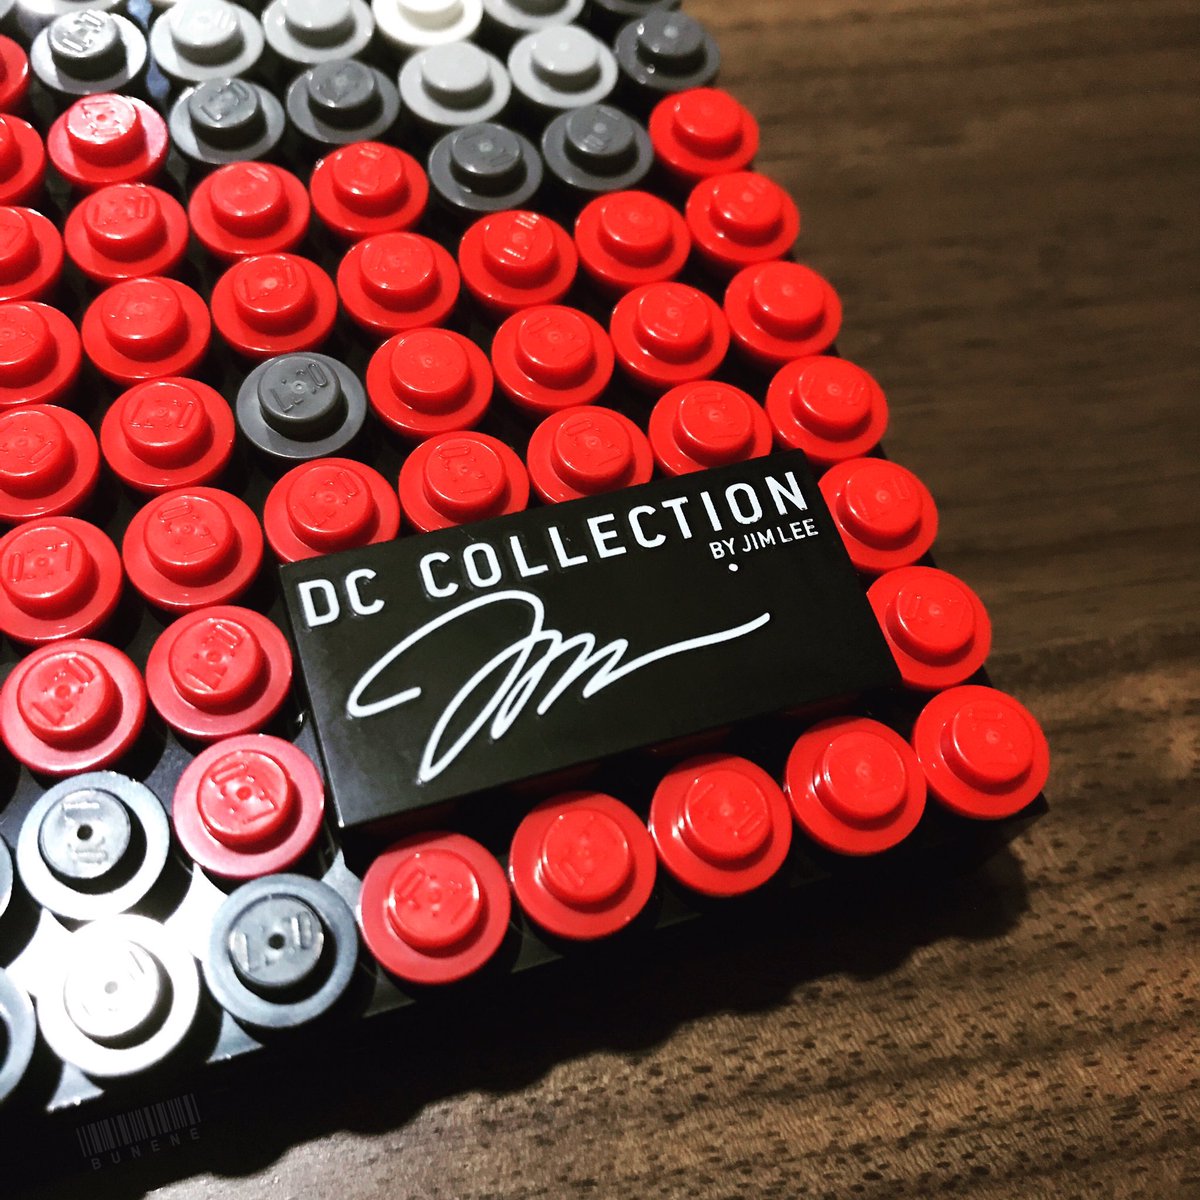 LEGO Art. DC Collection. Jim Lee.
•
#BuNinayBricks #buneneBricks #lego #afol #legoart #jimlee #dccollection #batman #joker #pinoylug #phlug #bricknetwork #brickcentral #brickgeekz #brickstagram #brickculture #legostagram #legography #legophotography #legolife #toyphotography